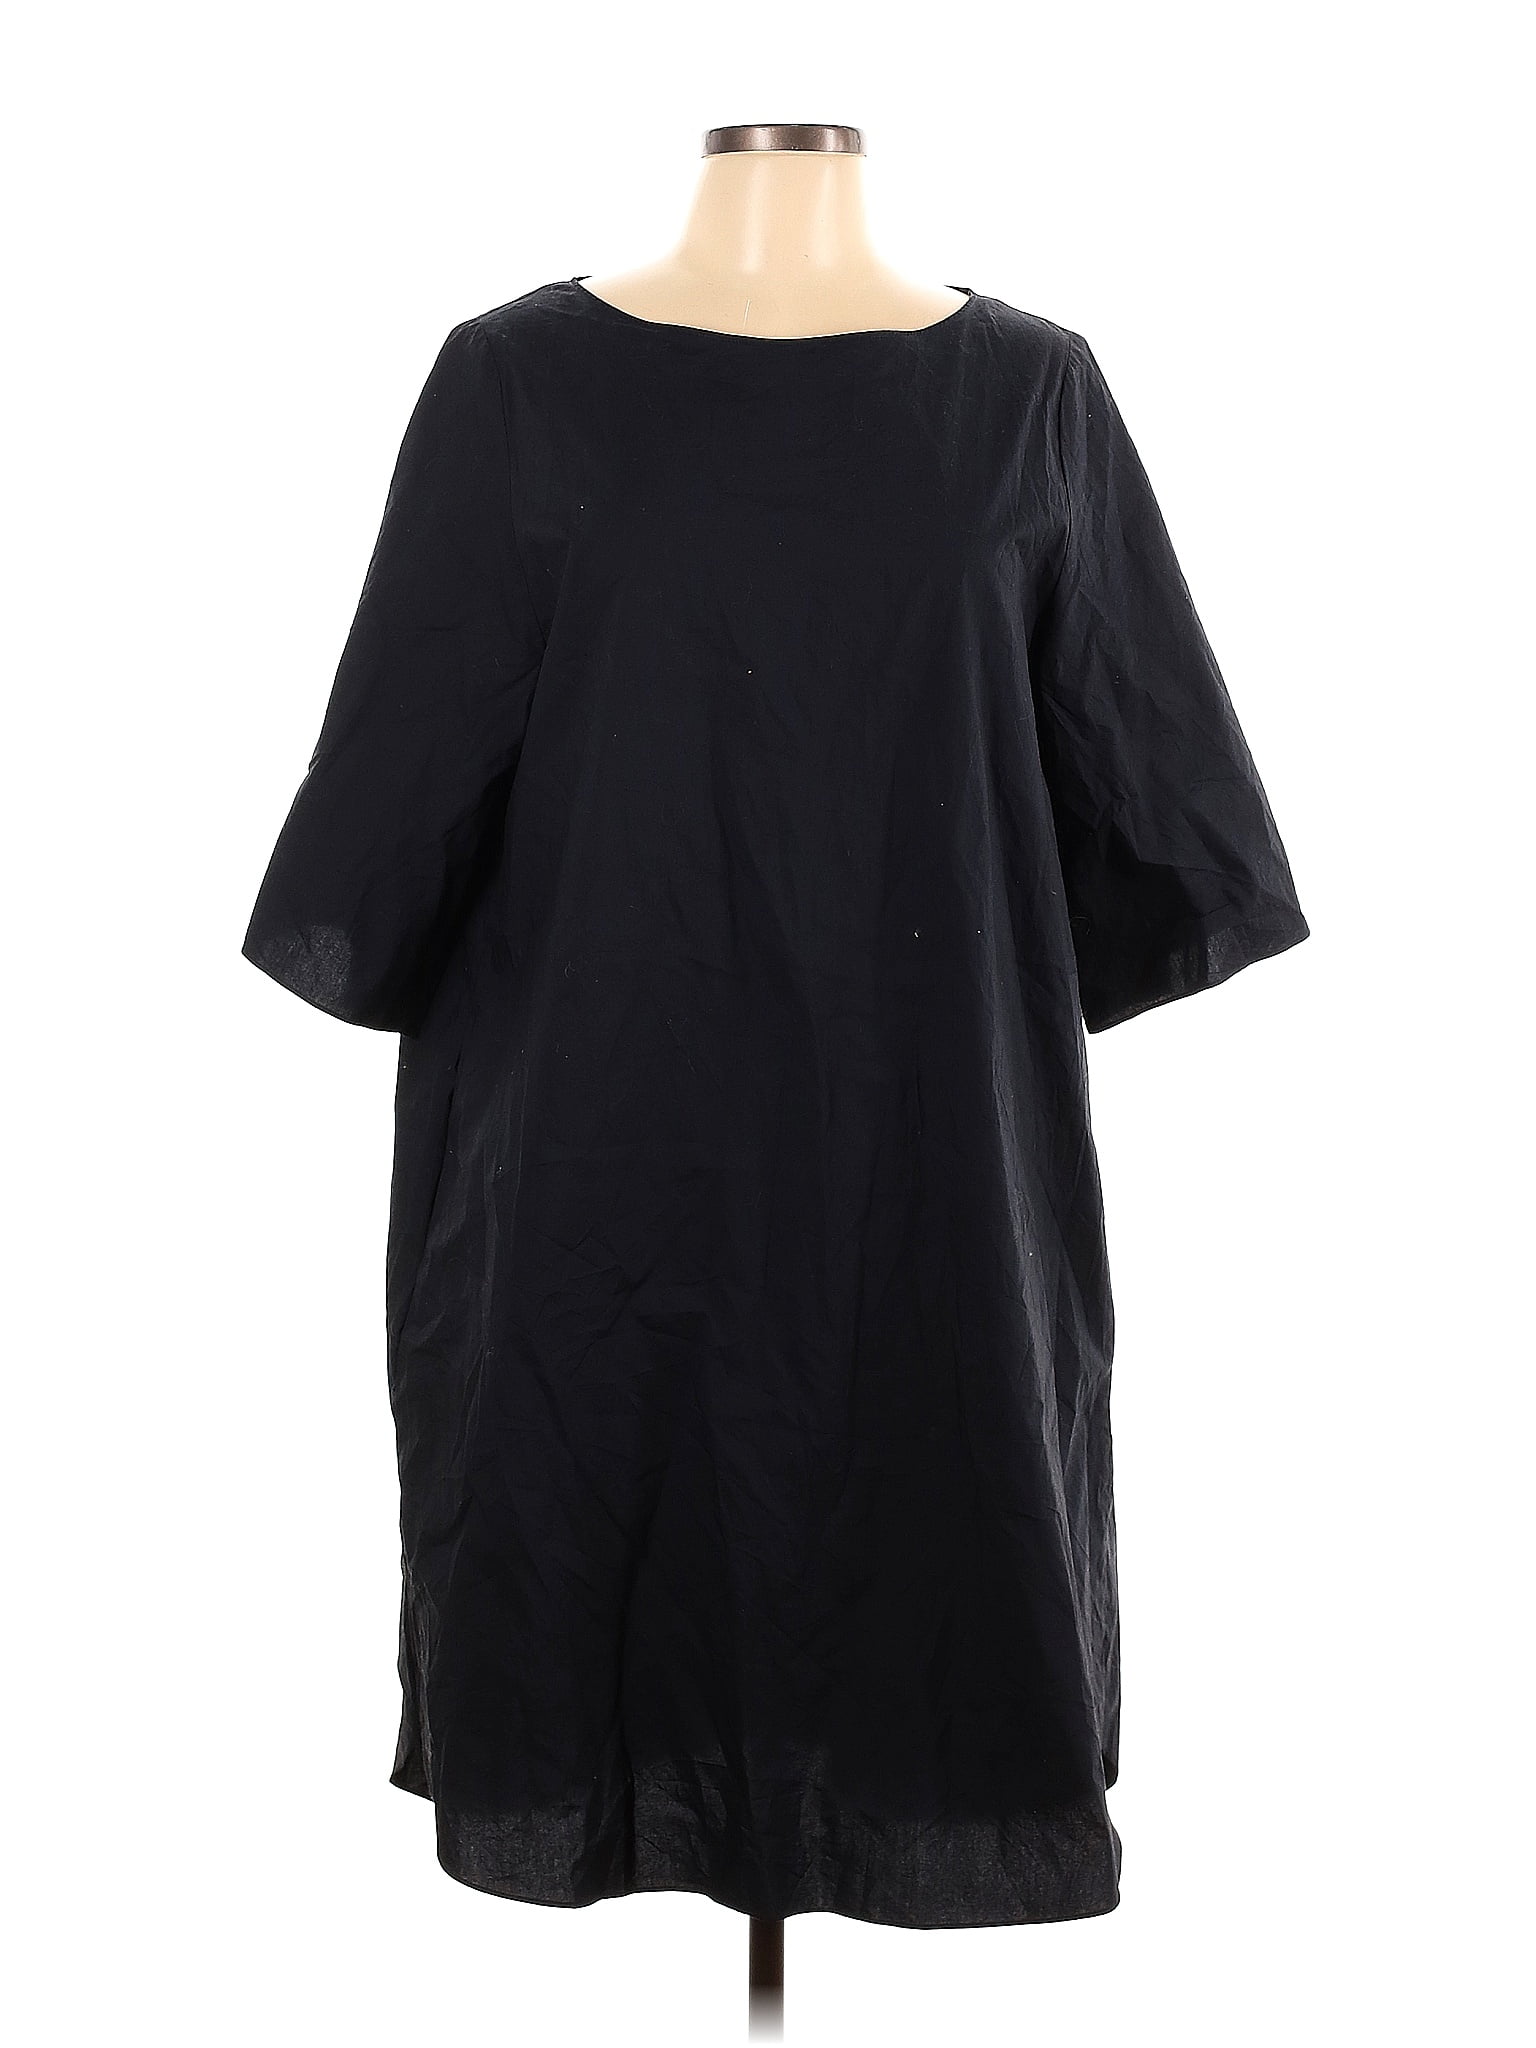 Cos 100% Cotton Black Casual Dress Size 12 - 65% off | thredUP